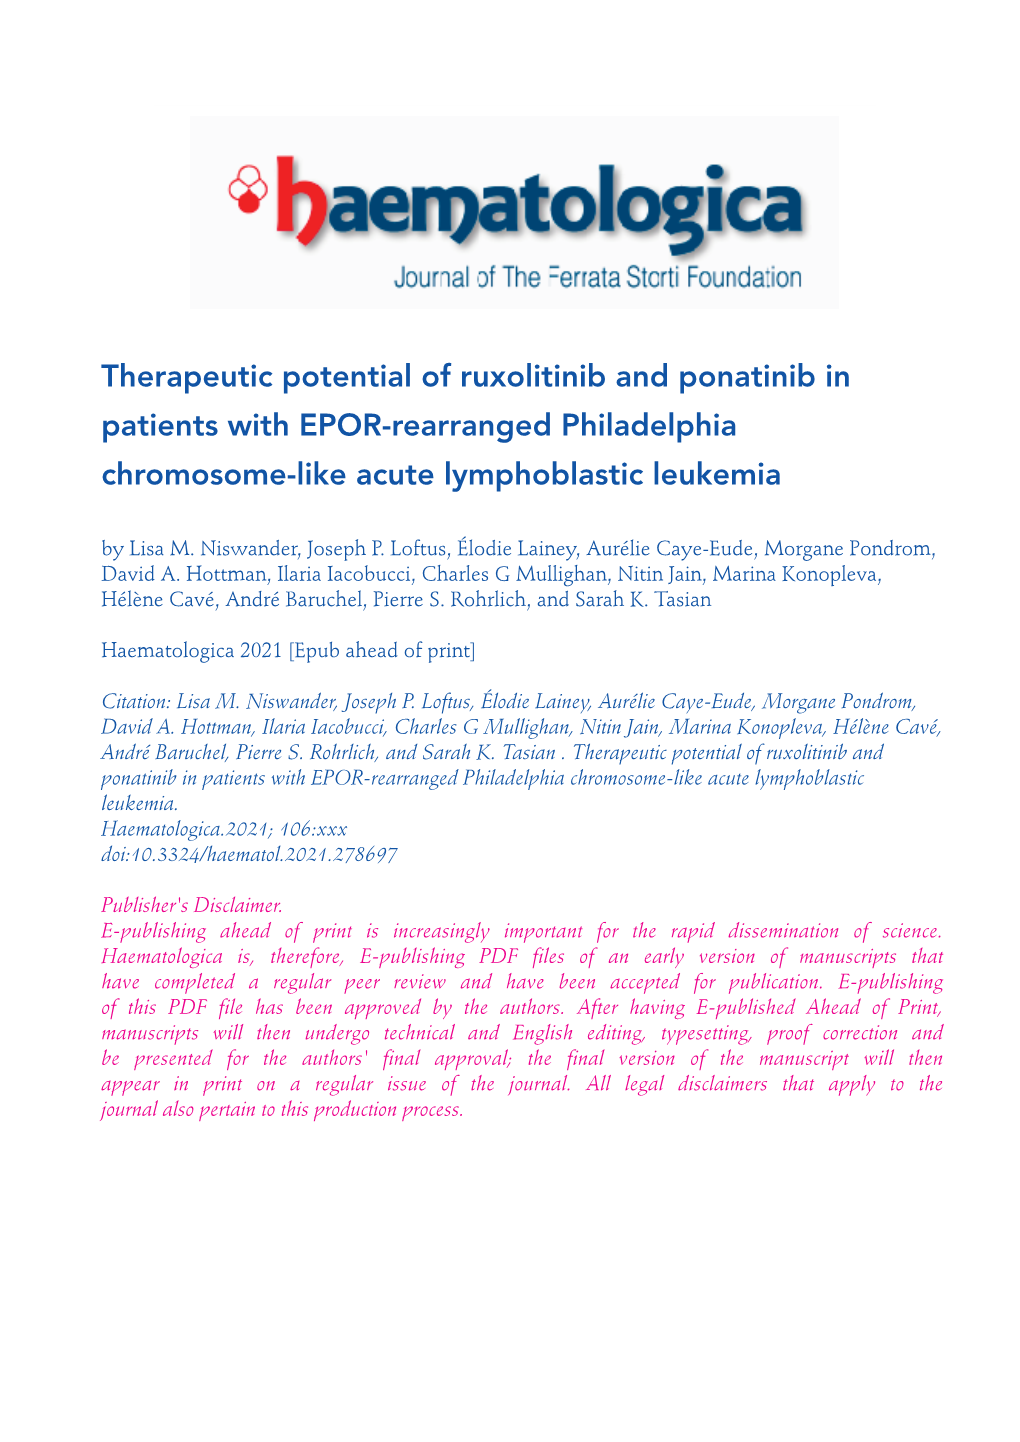 Therapeutic Potential of Ruxolitinib and Ponatinib in Patients with EPOR-Rearranged Philadelphia Chromosome-Like Acute Lymphoblastic Leukemia by Lisa M